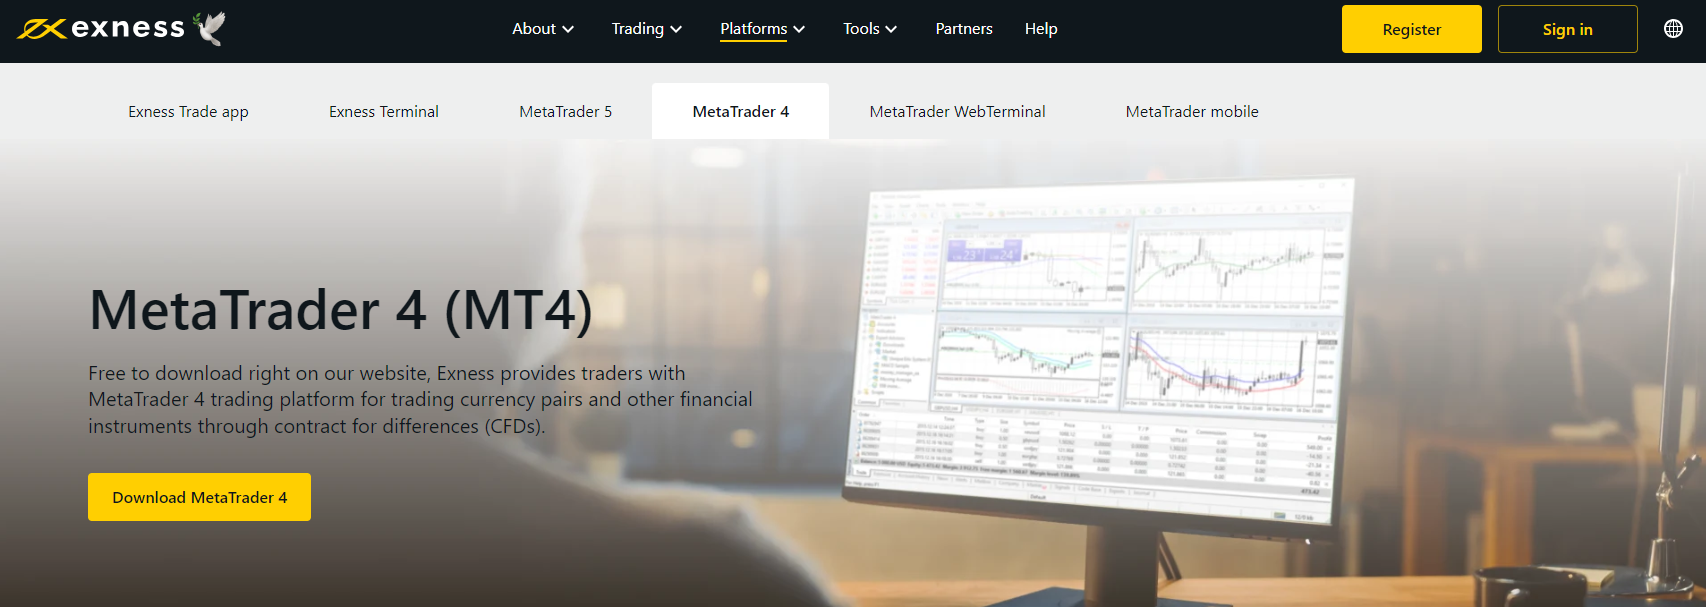 MetaTrader 4 - Piattaforma di Trading su Exness